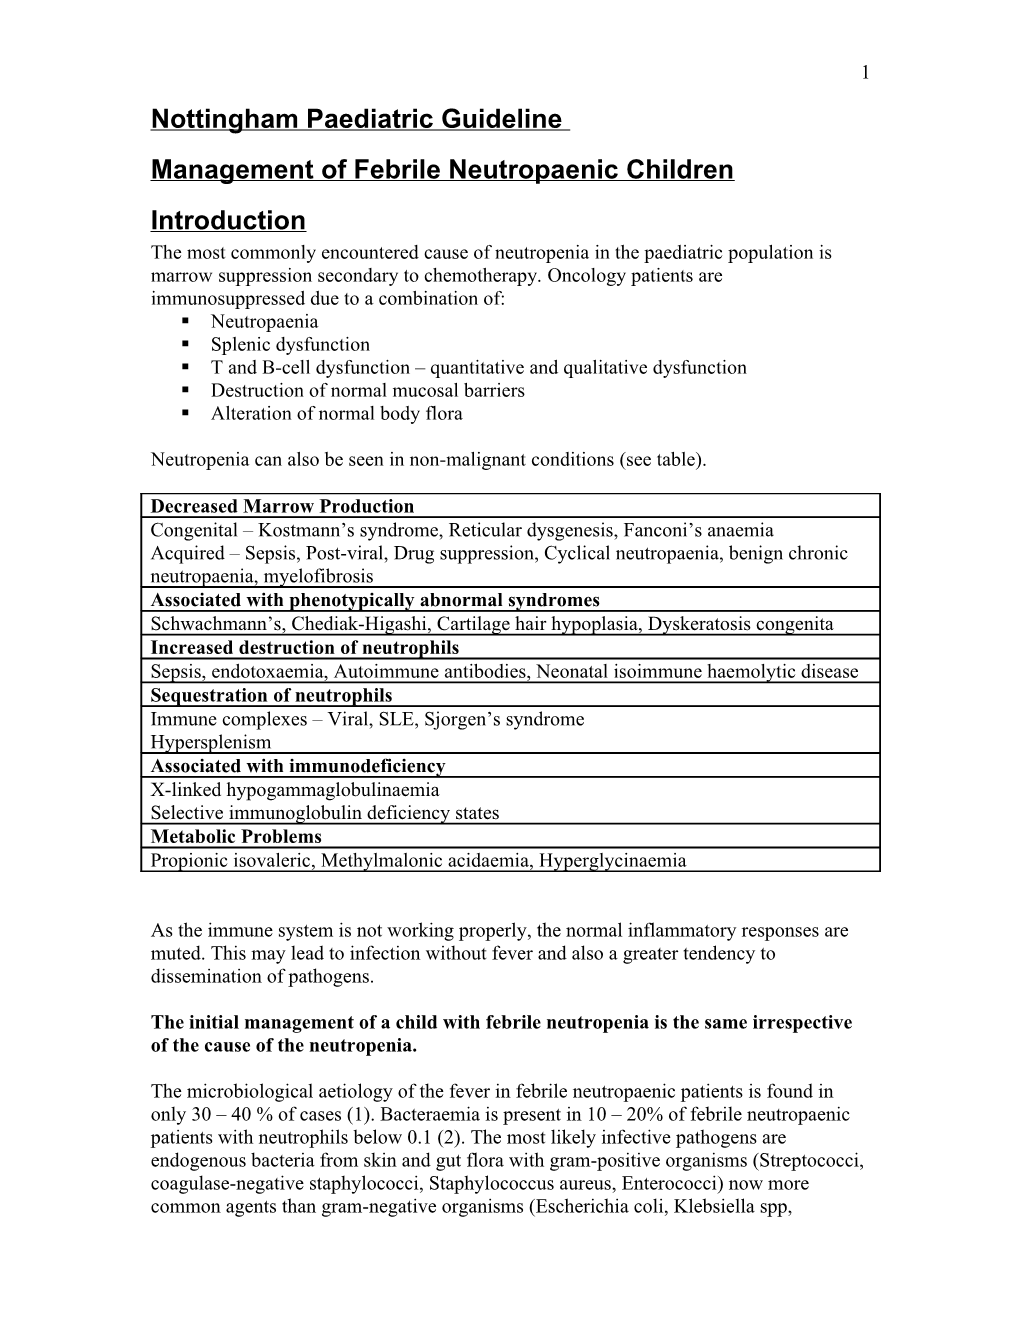 Management of Febrile Neutropenic Children